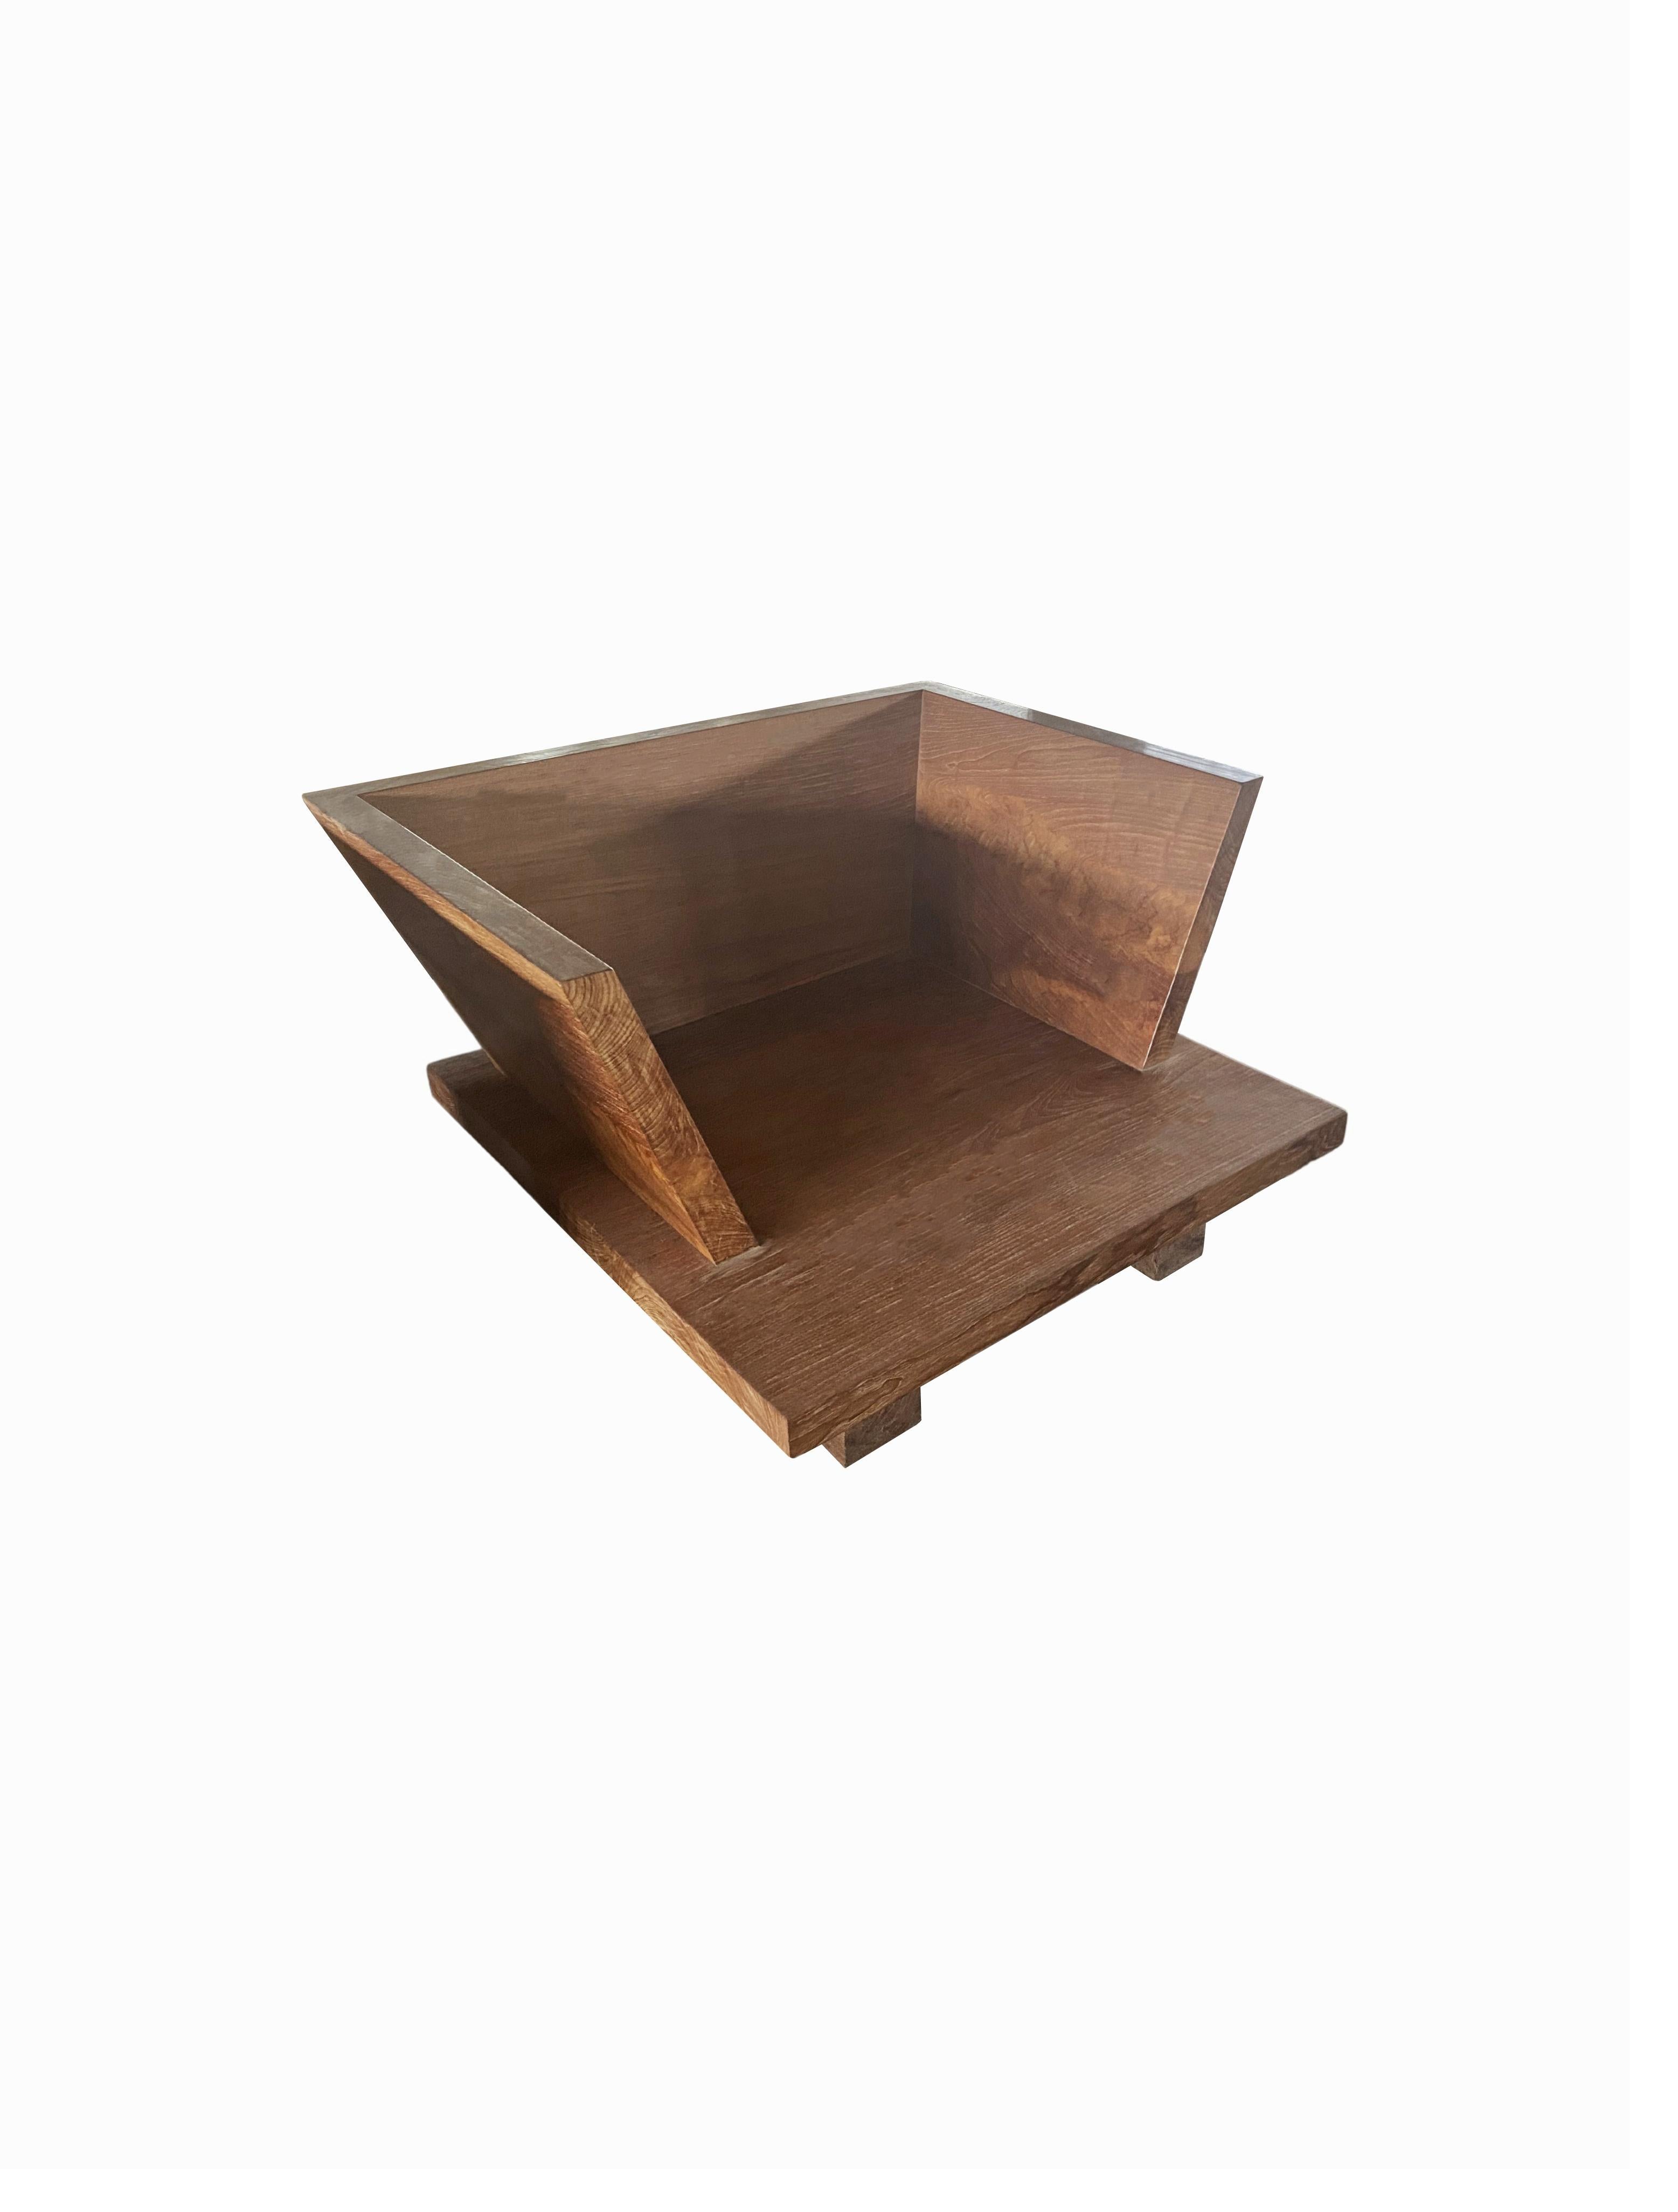 Indonesian Modern Teak Wood Lounge Chair For Sale